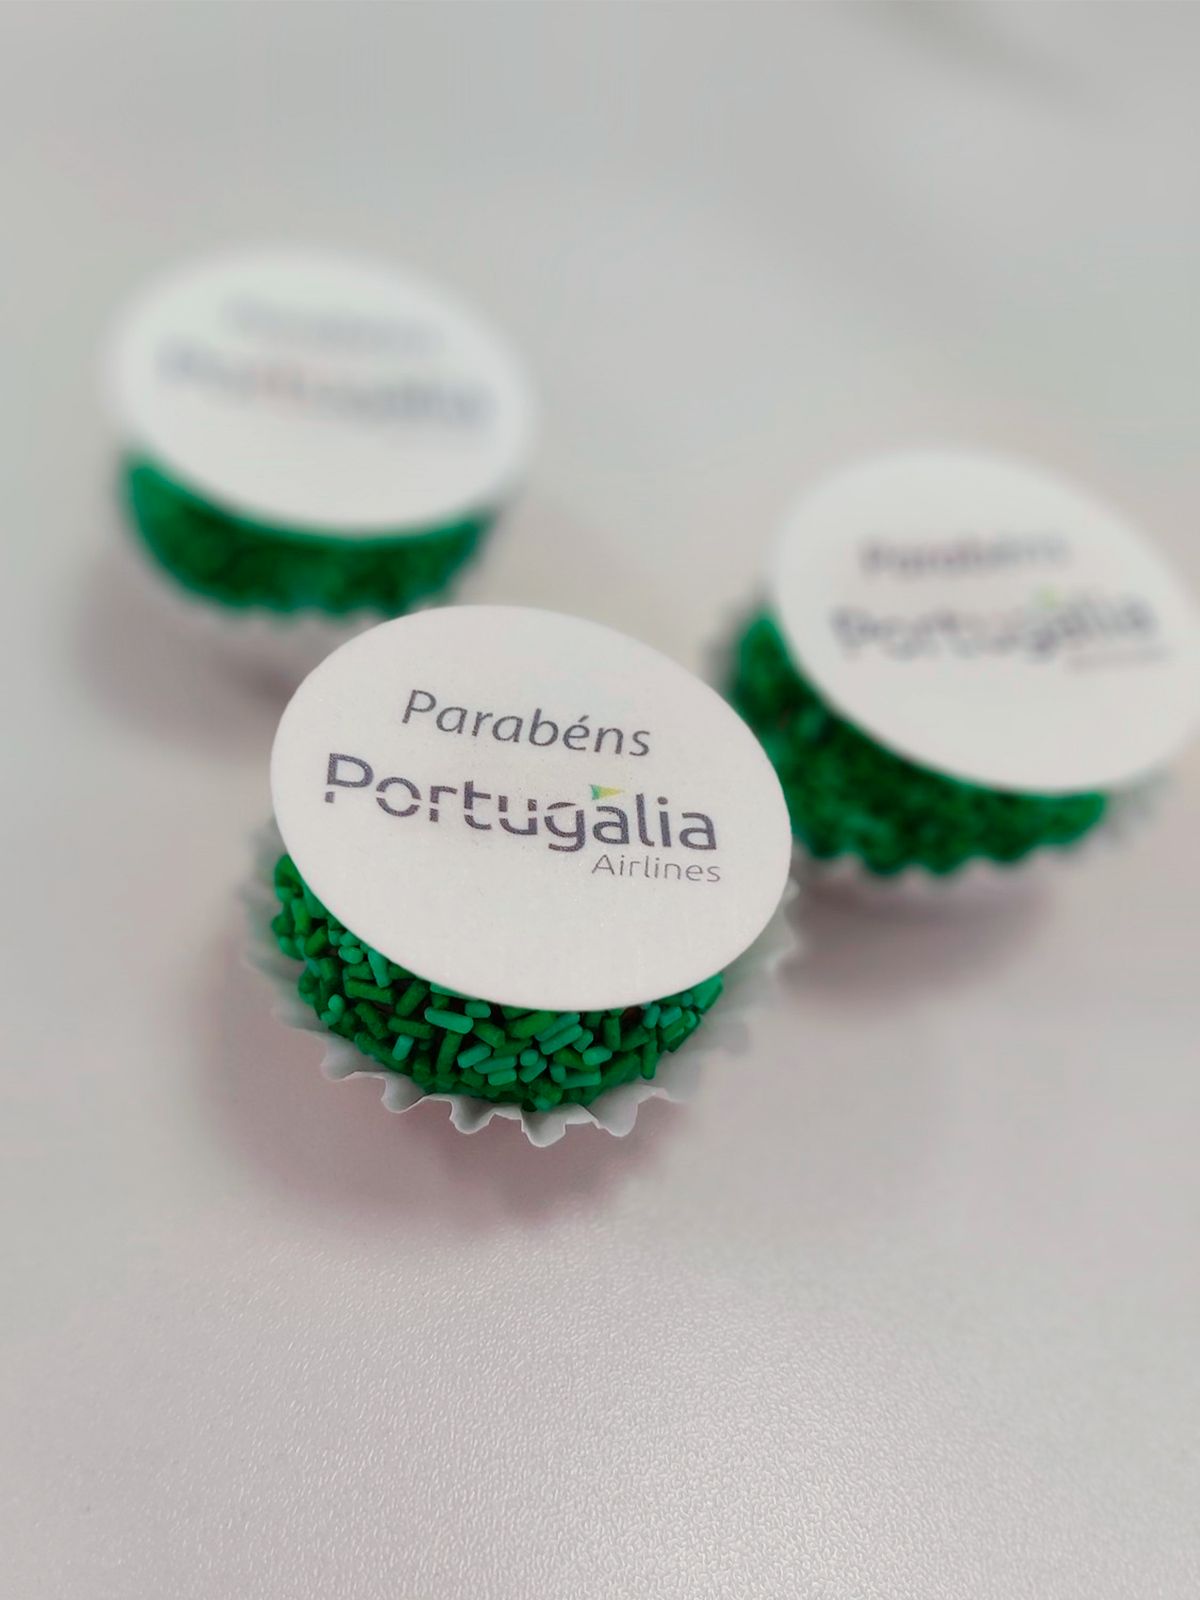 Portugalia Airlines celebrates its 32nd birthday